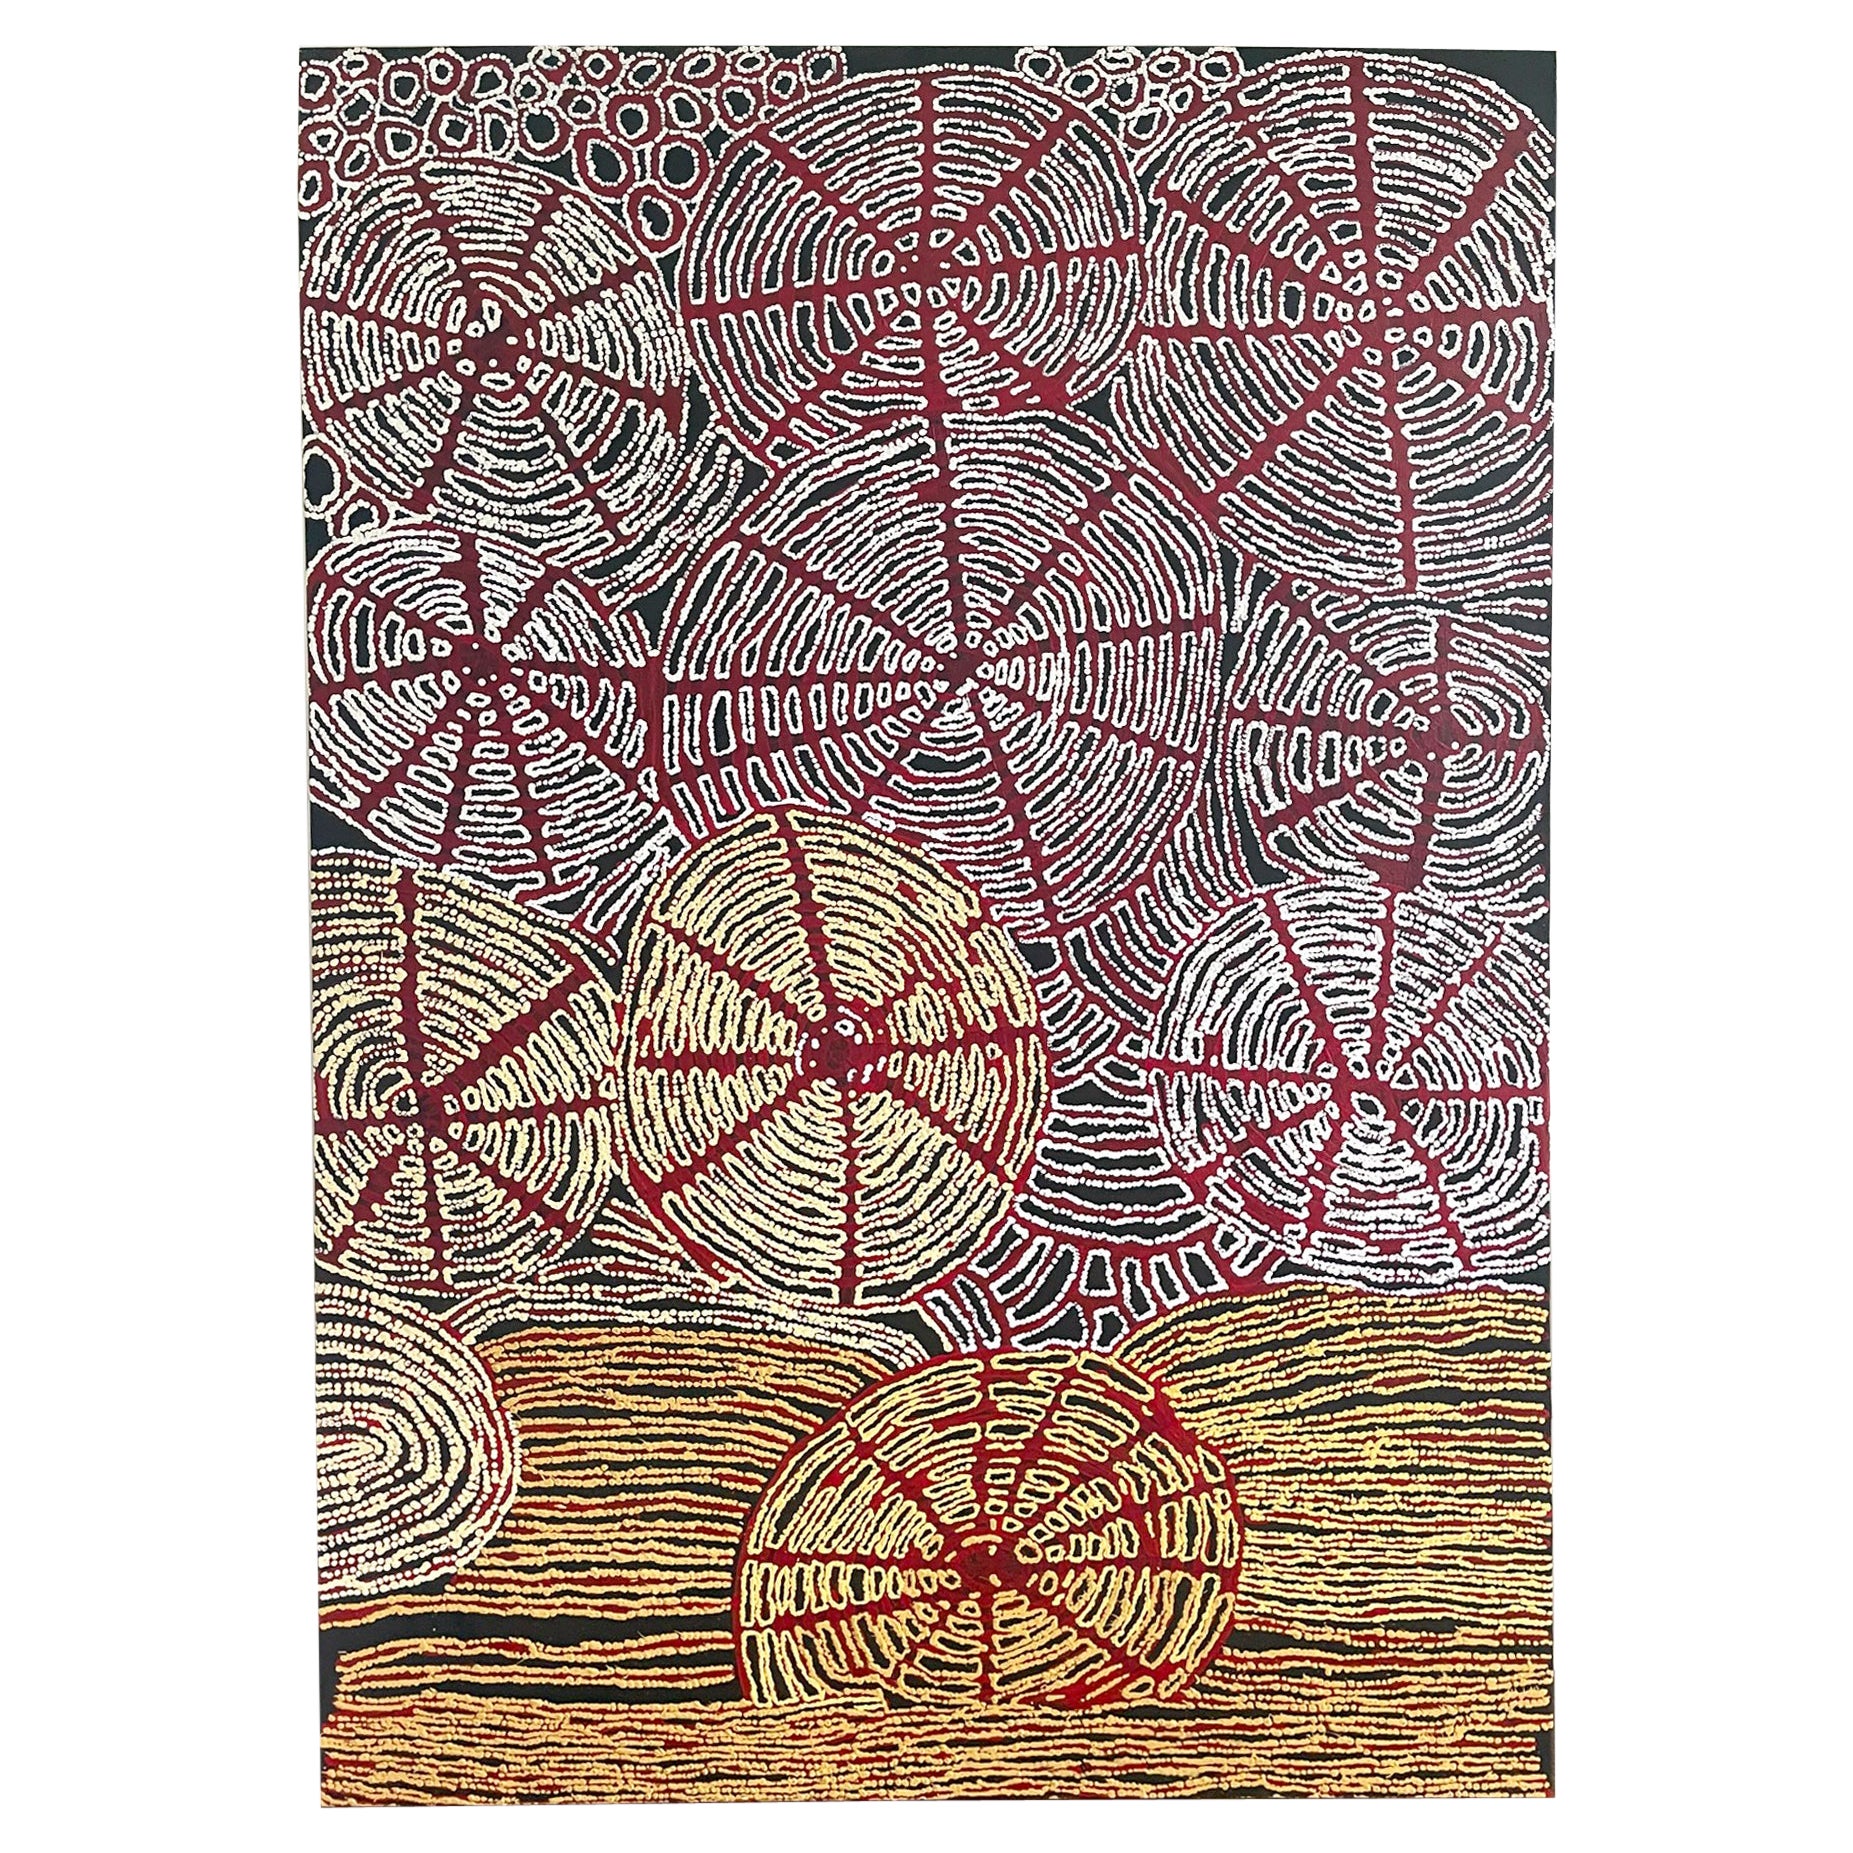 Contemporary Australian Aboriginal Painting by Walangkura Napanangka